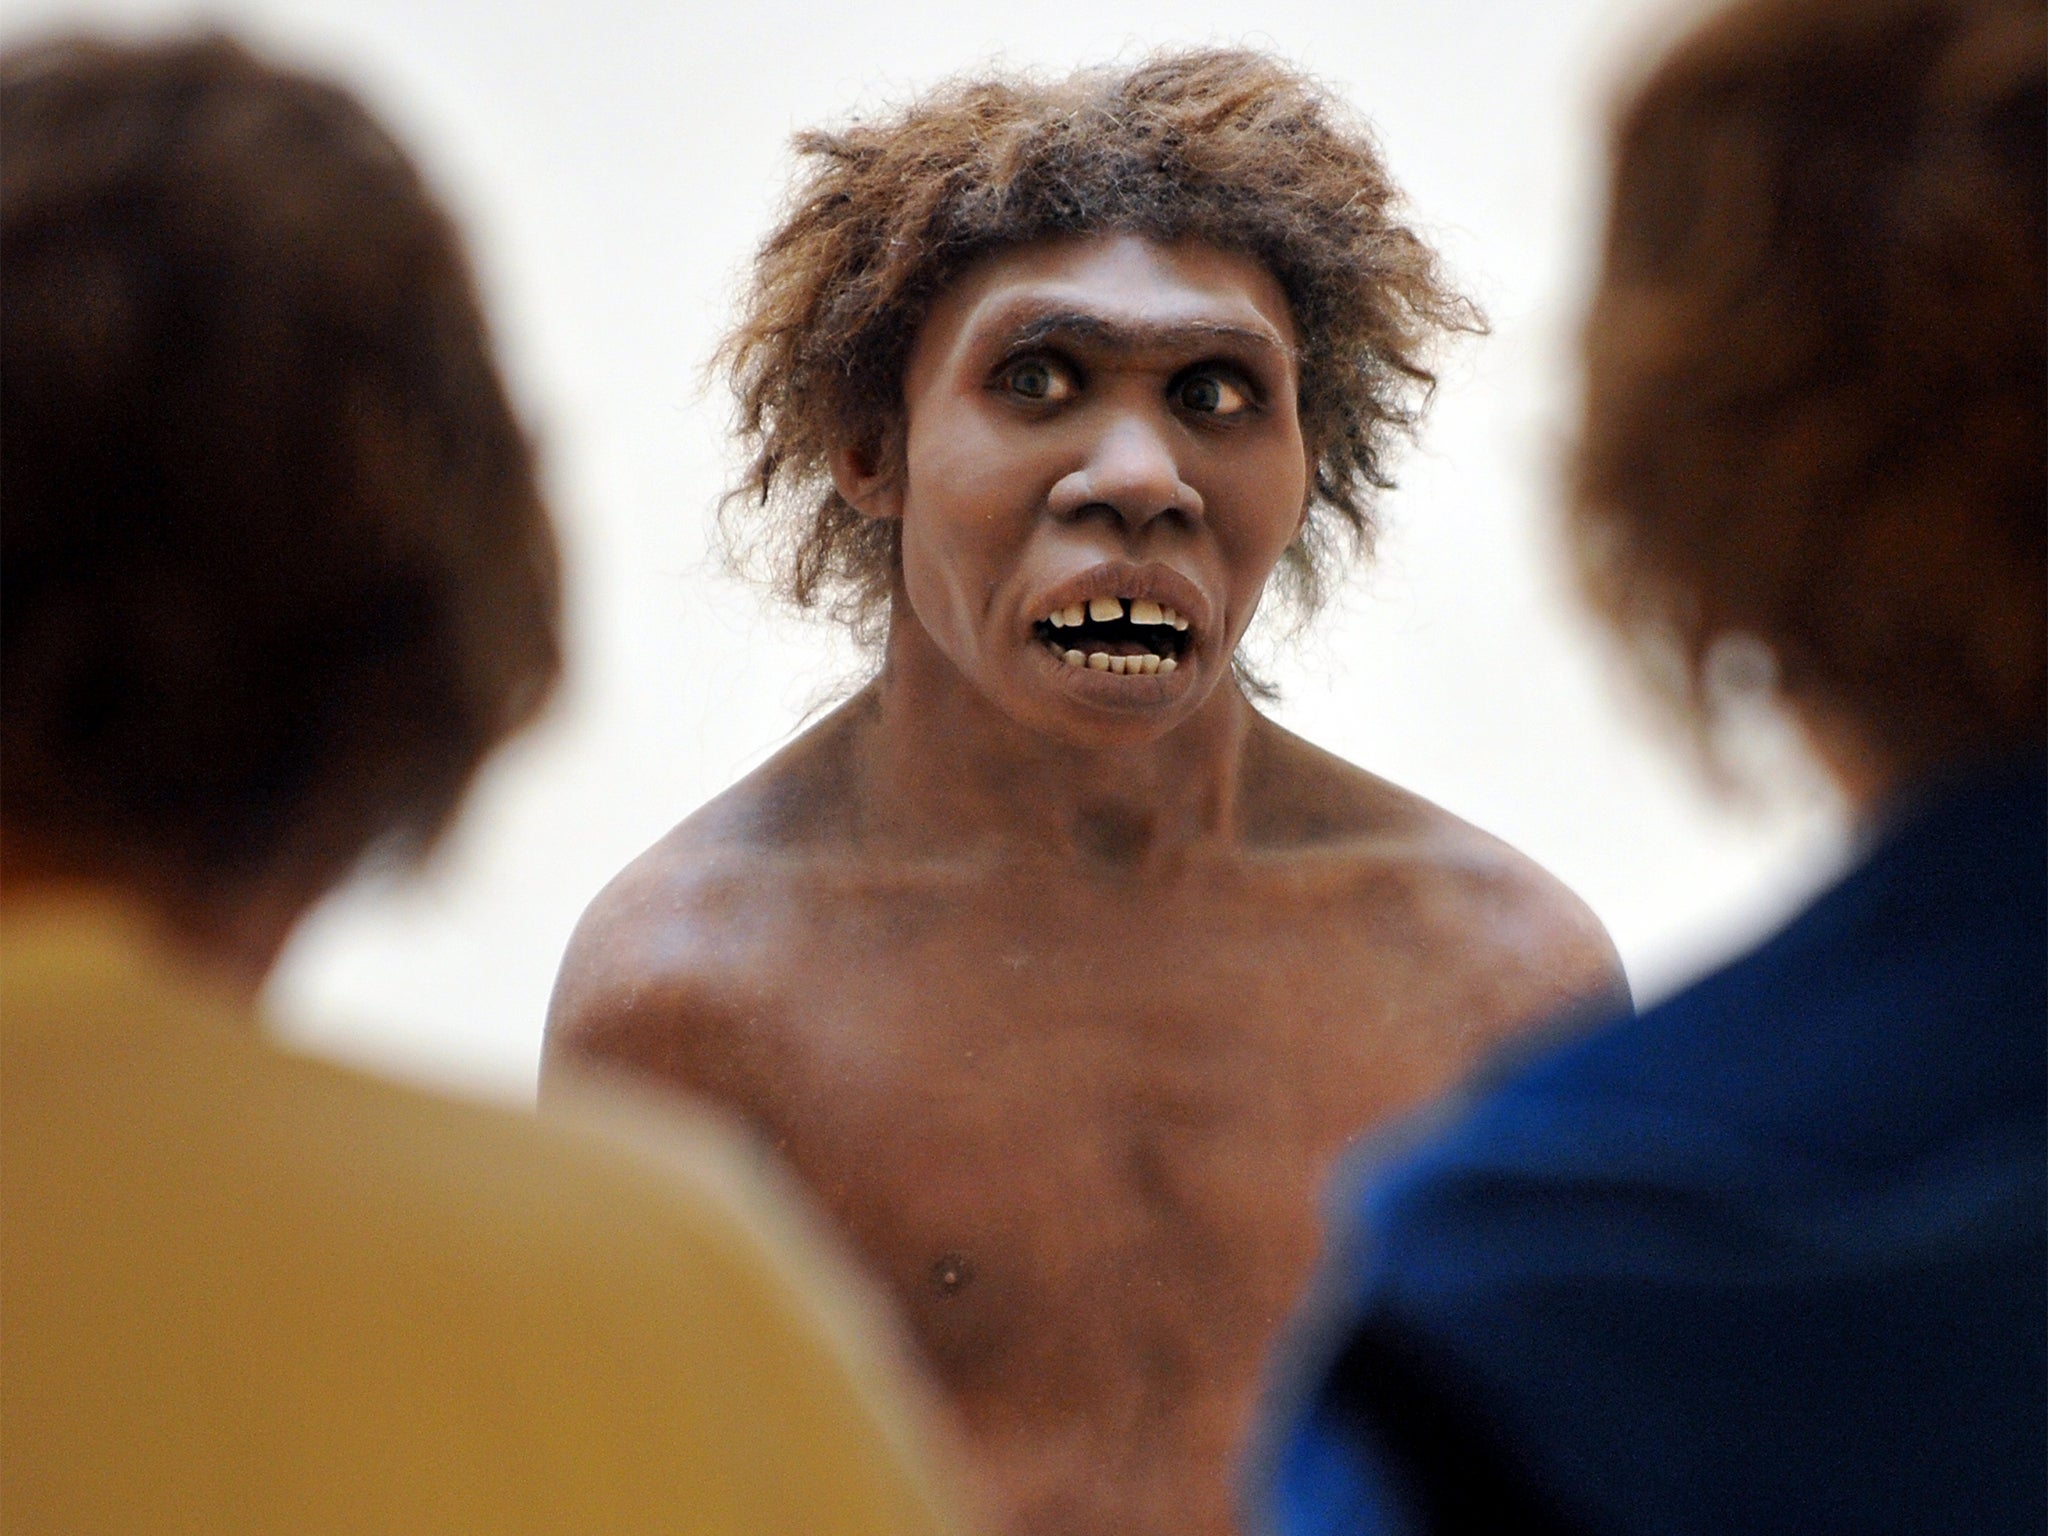 Neanderthals Bwin